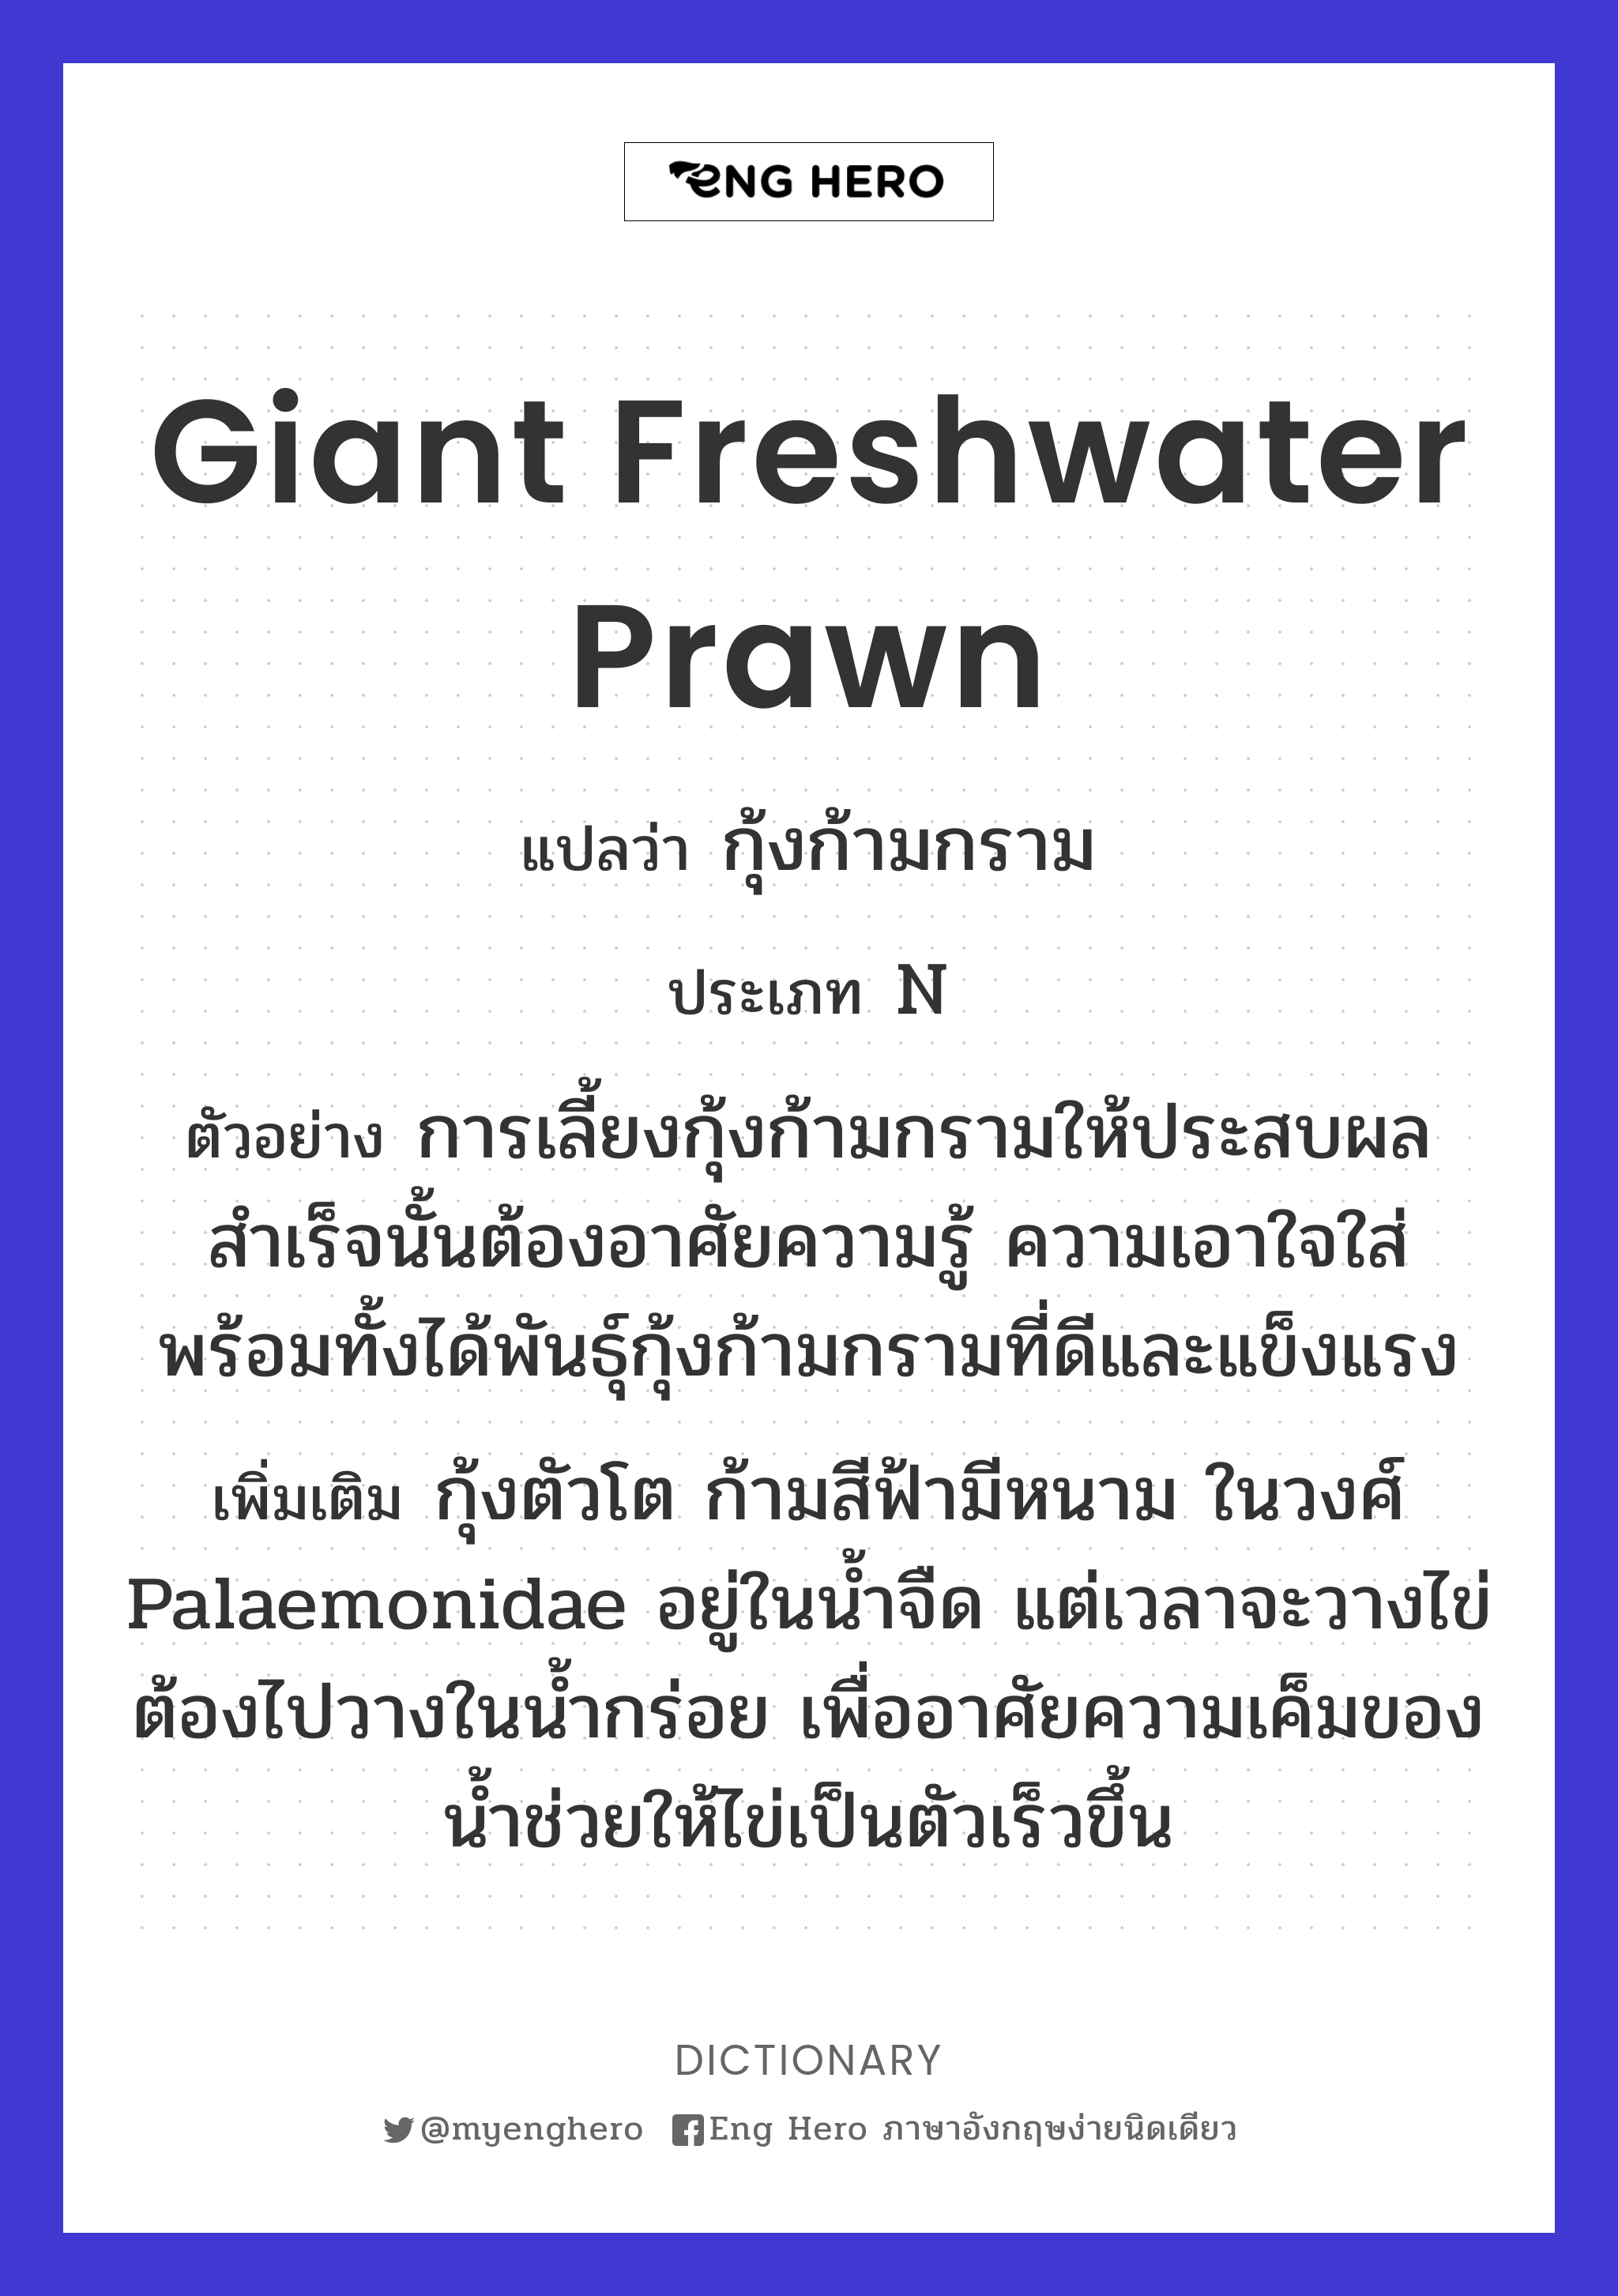 giant freshwater prawn